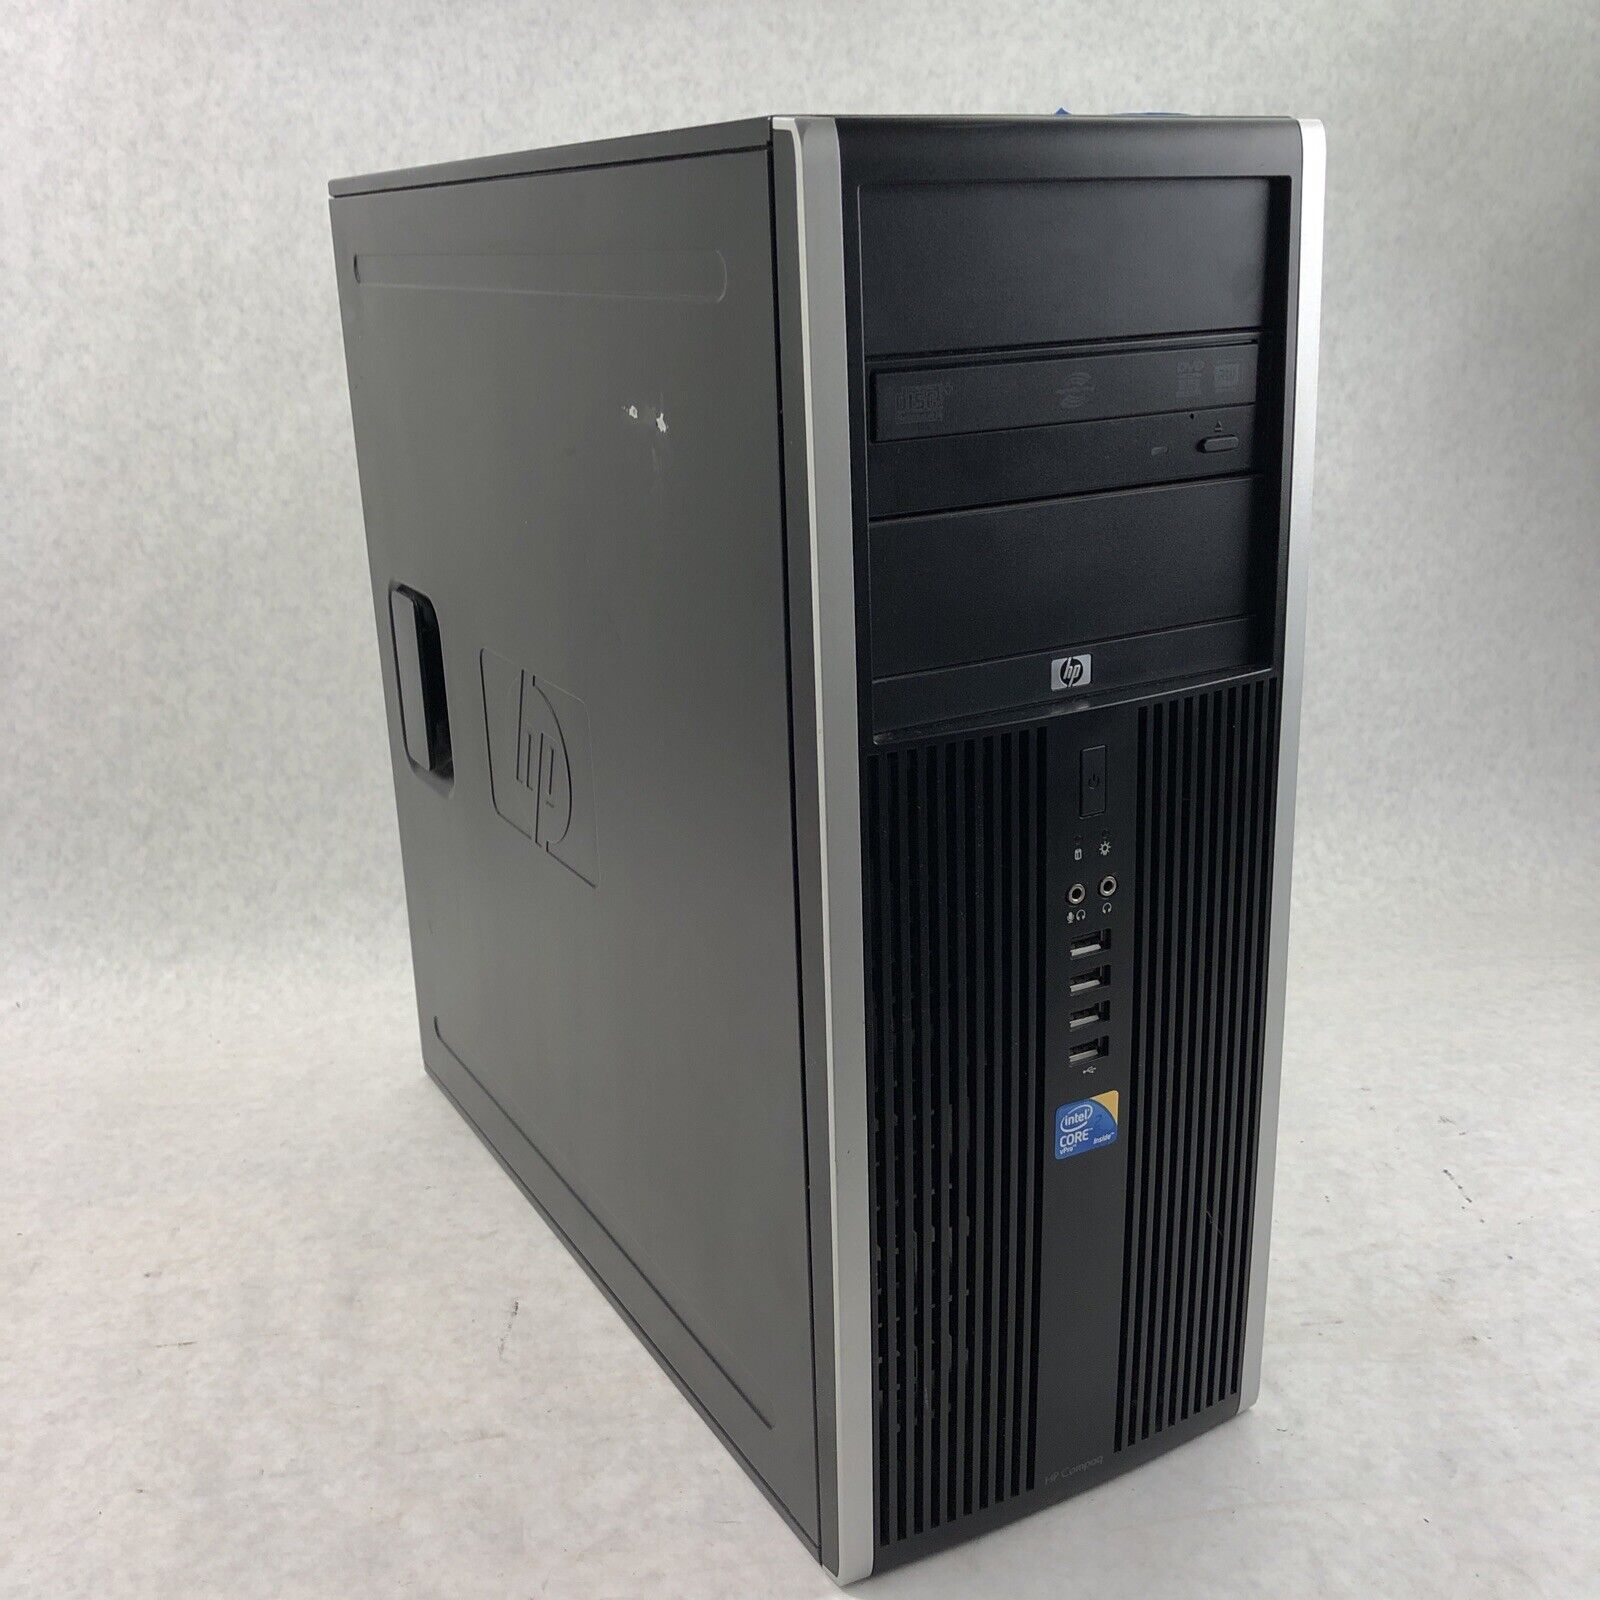 HP Compaq 8000 Elite Desktop Intel Core 2 Duo 3.00GHz 2GB RAM No HDD No OS